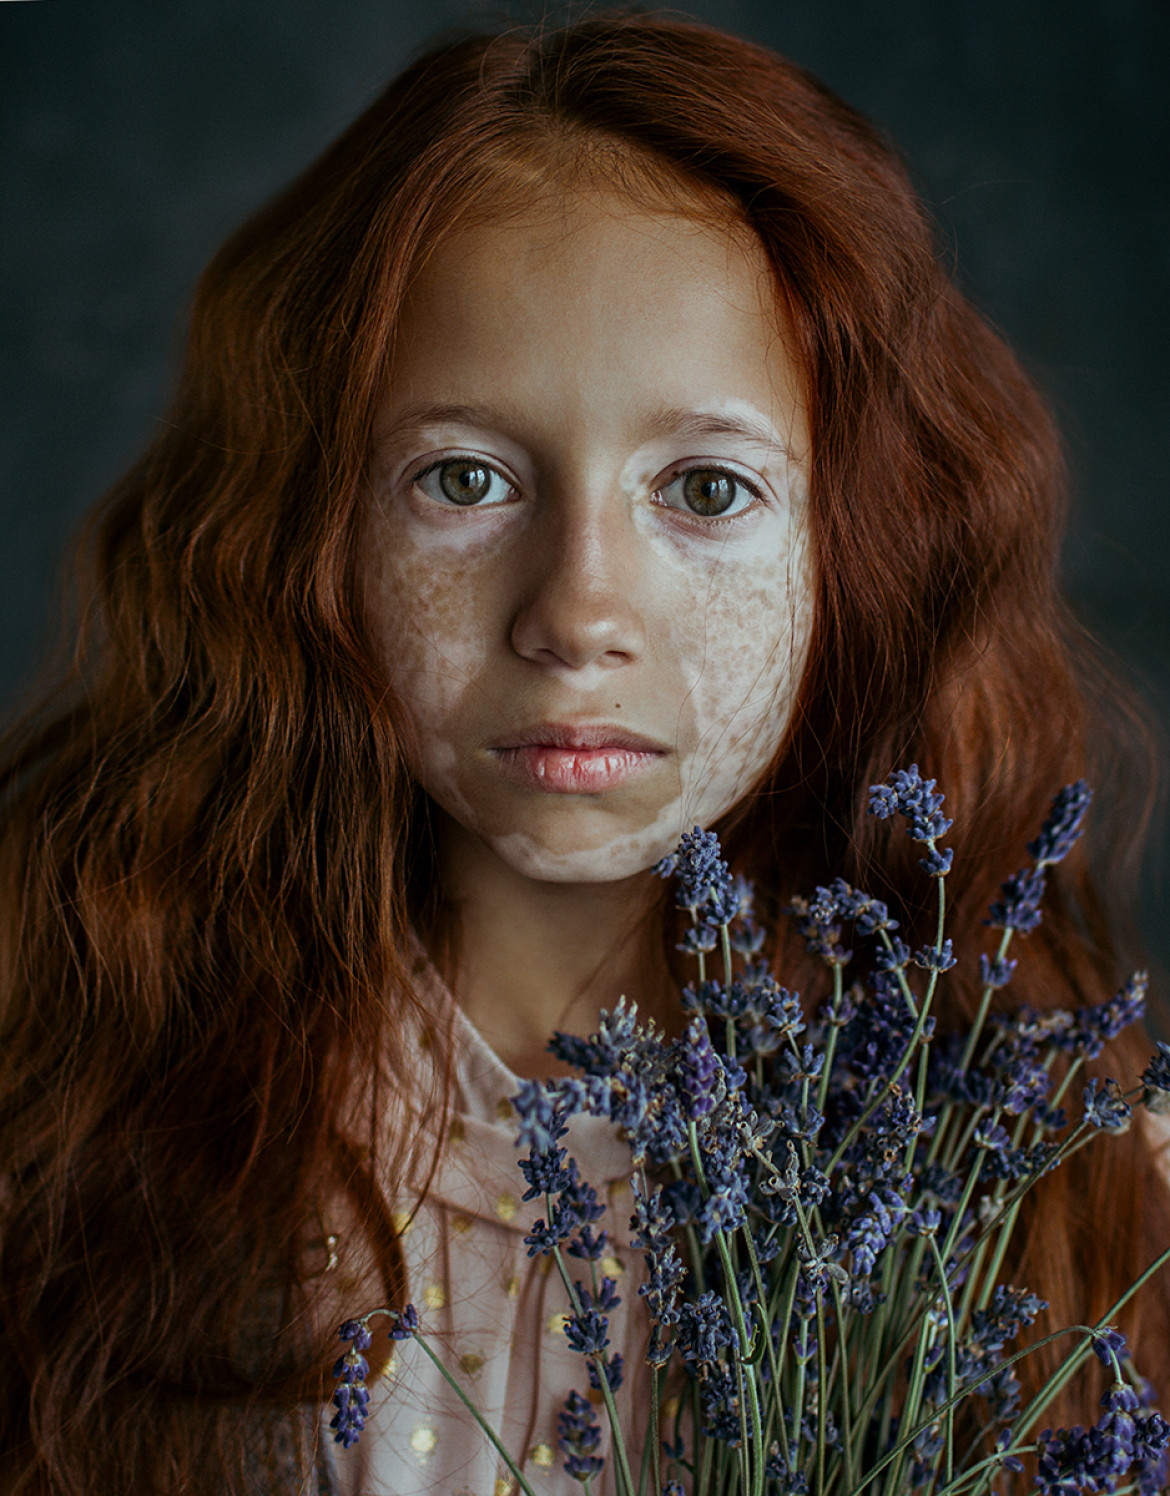 1 miejsce: Portrait - Irina Bunyatyan